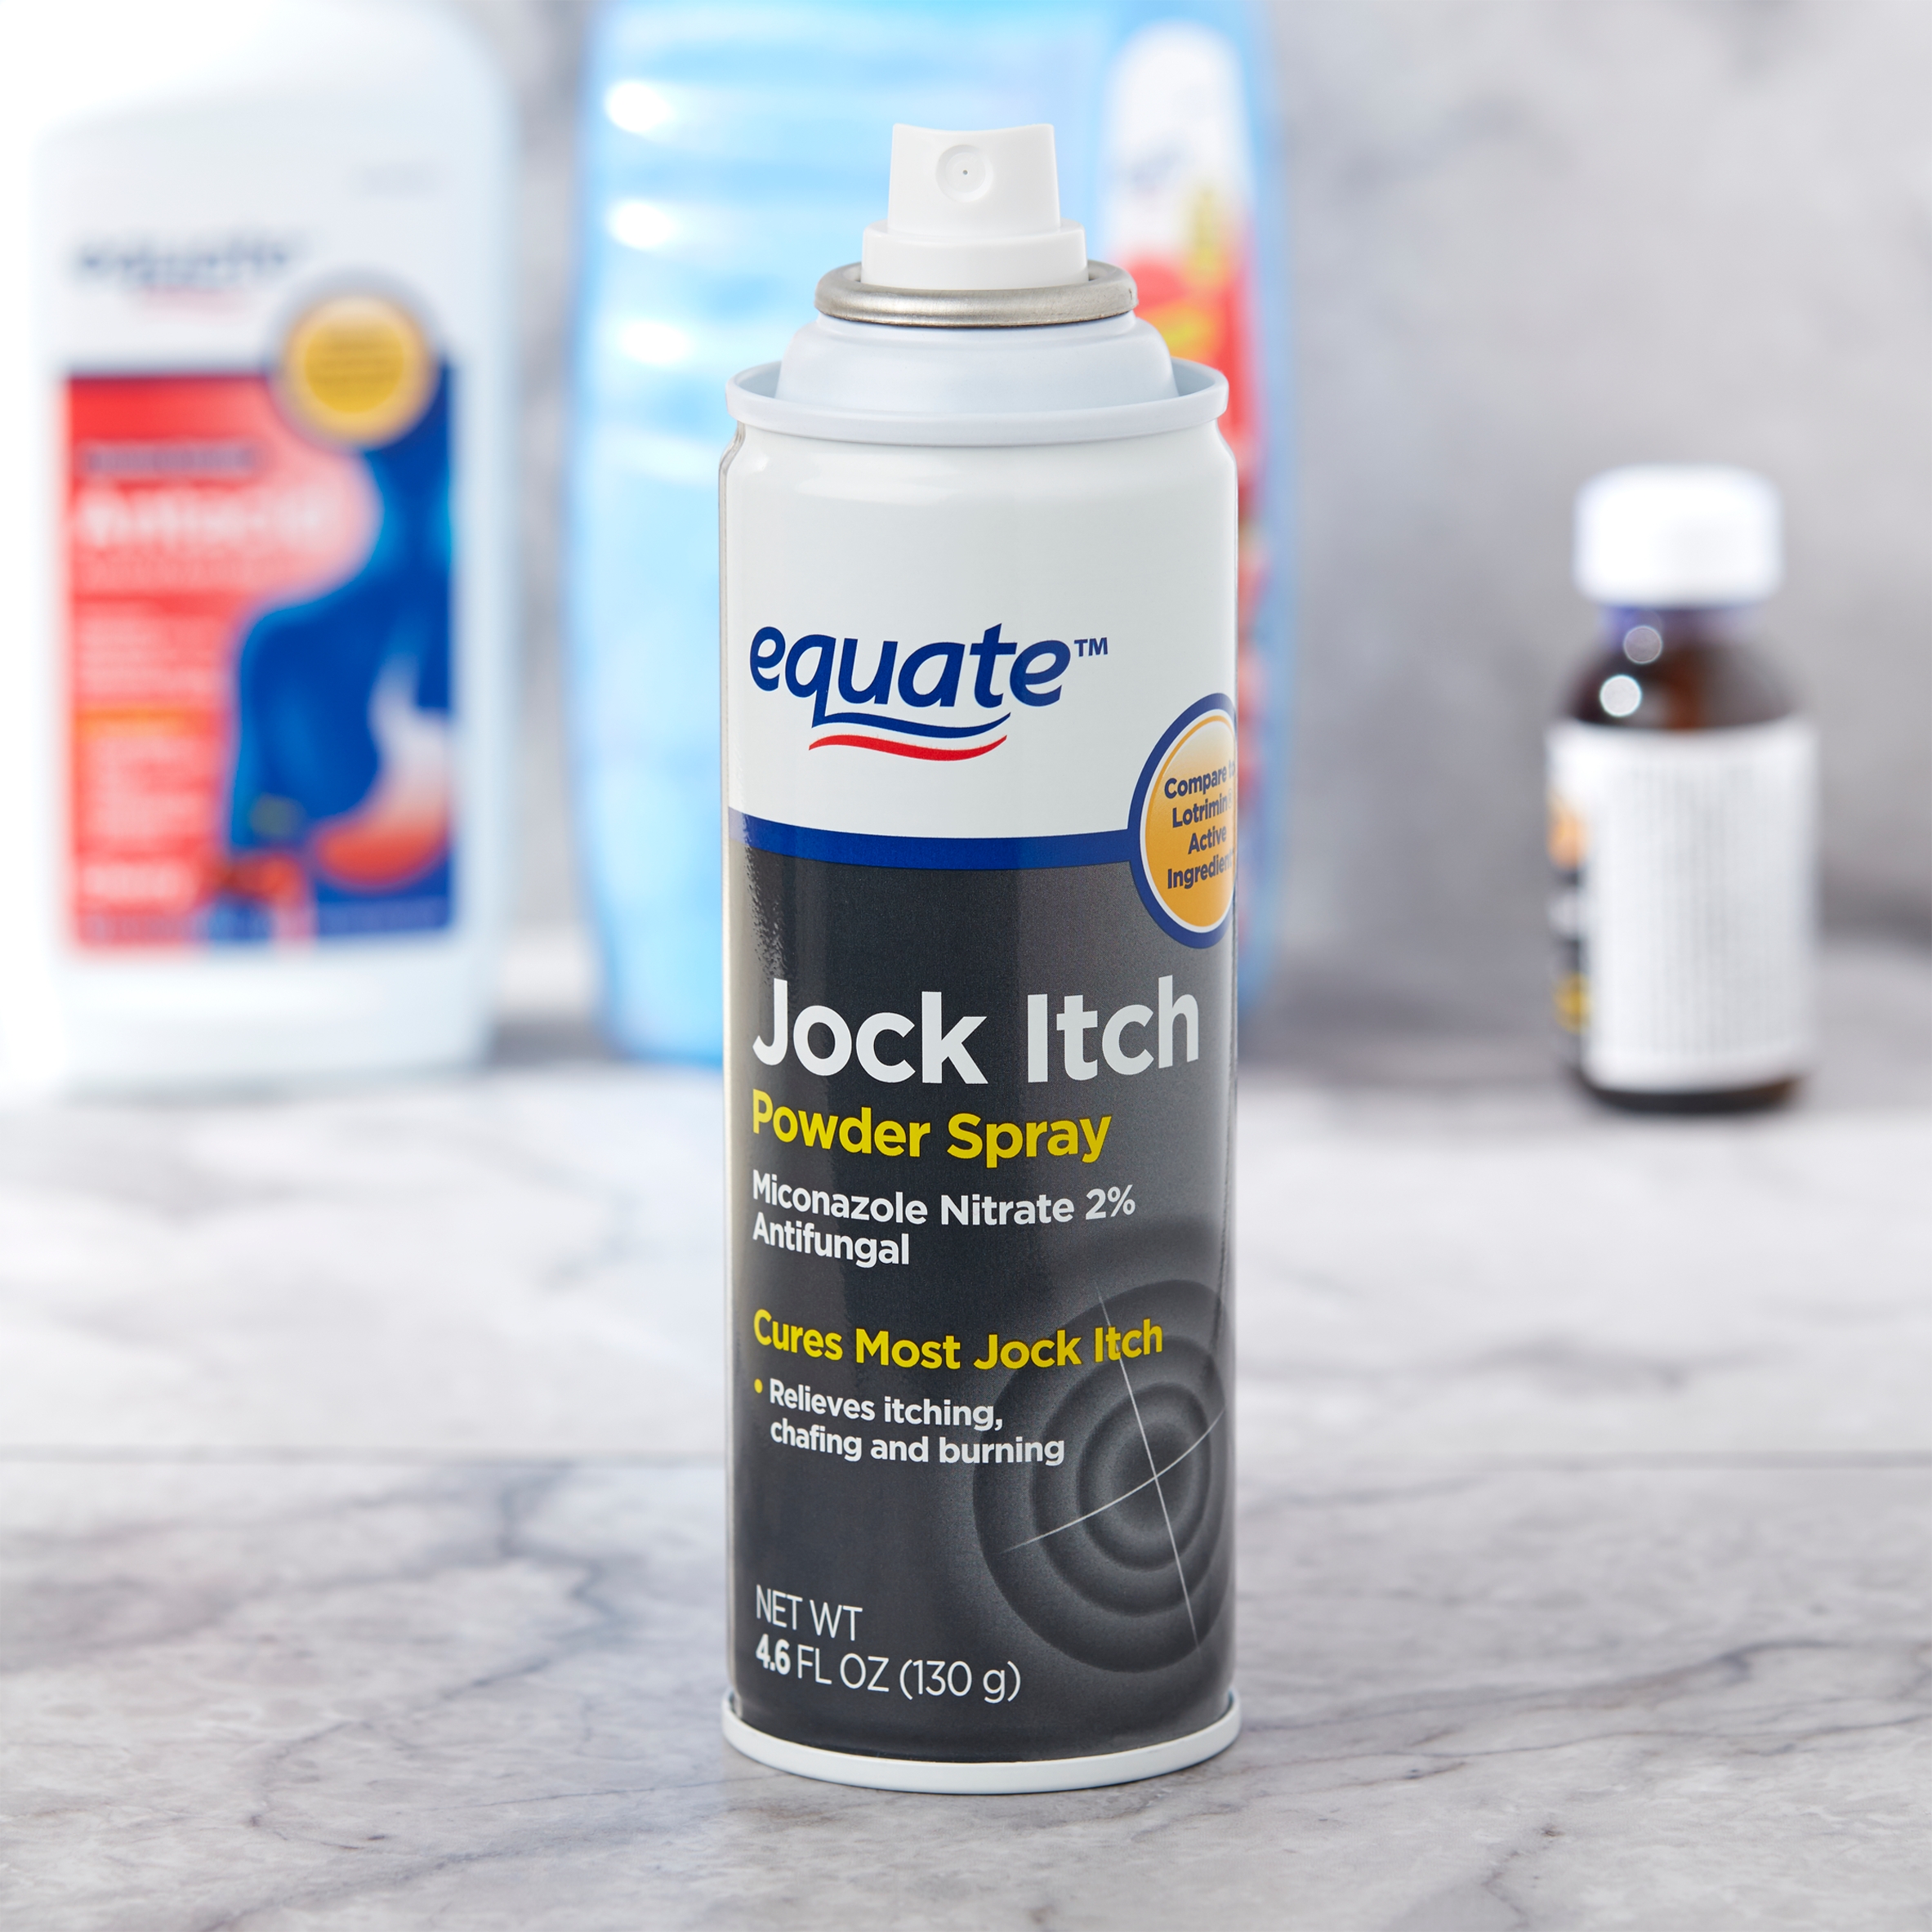 Equate Jock Itch Powder Spray, 4.6 fl oz - image 2 of 10